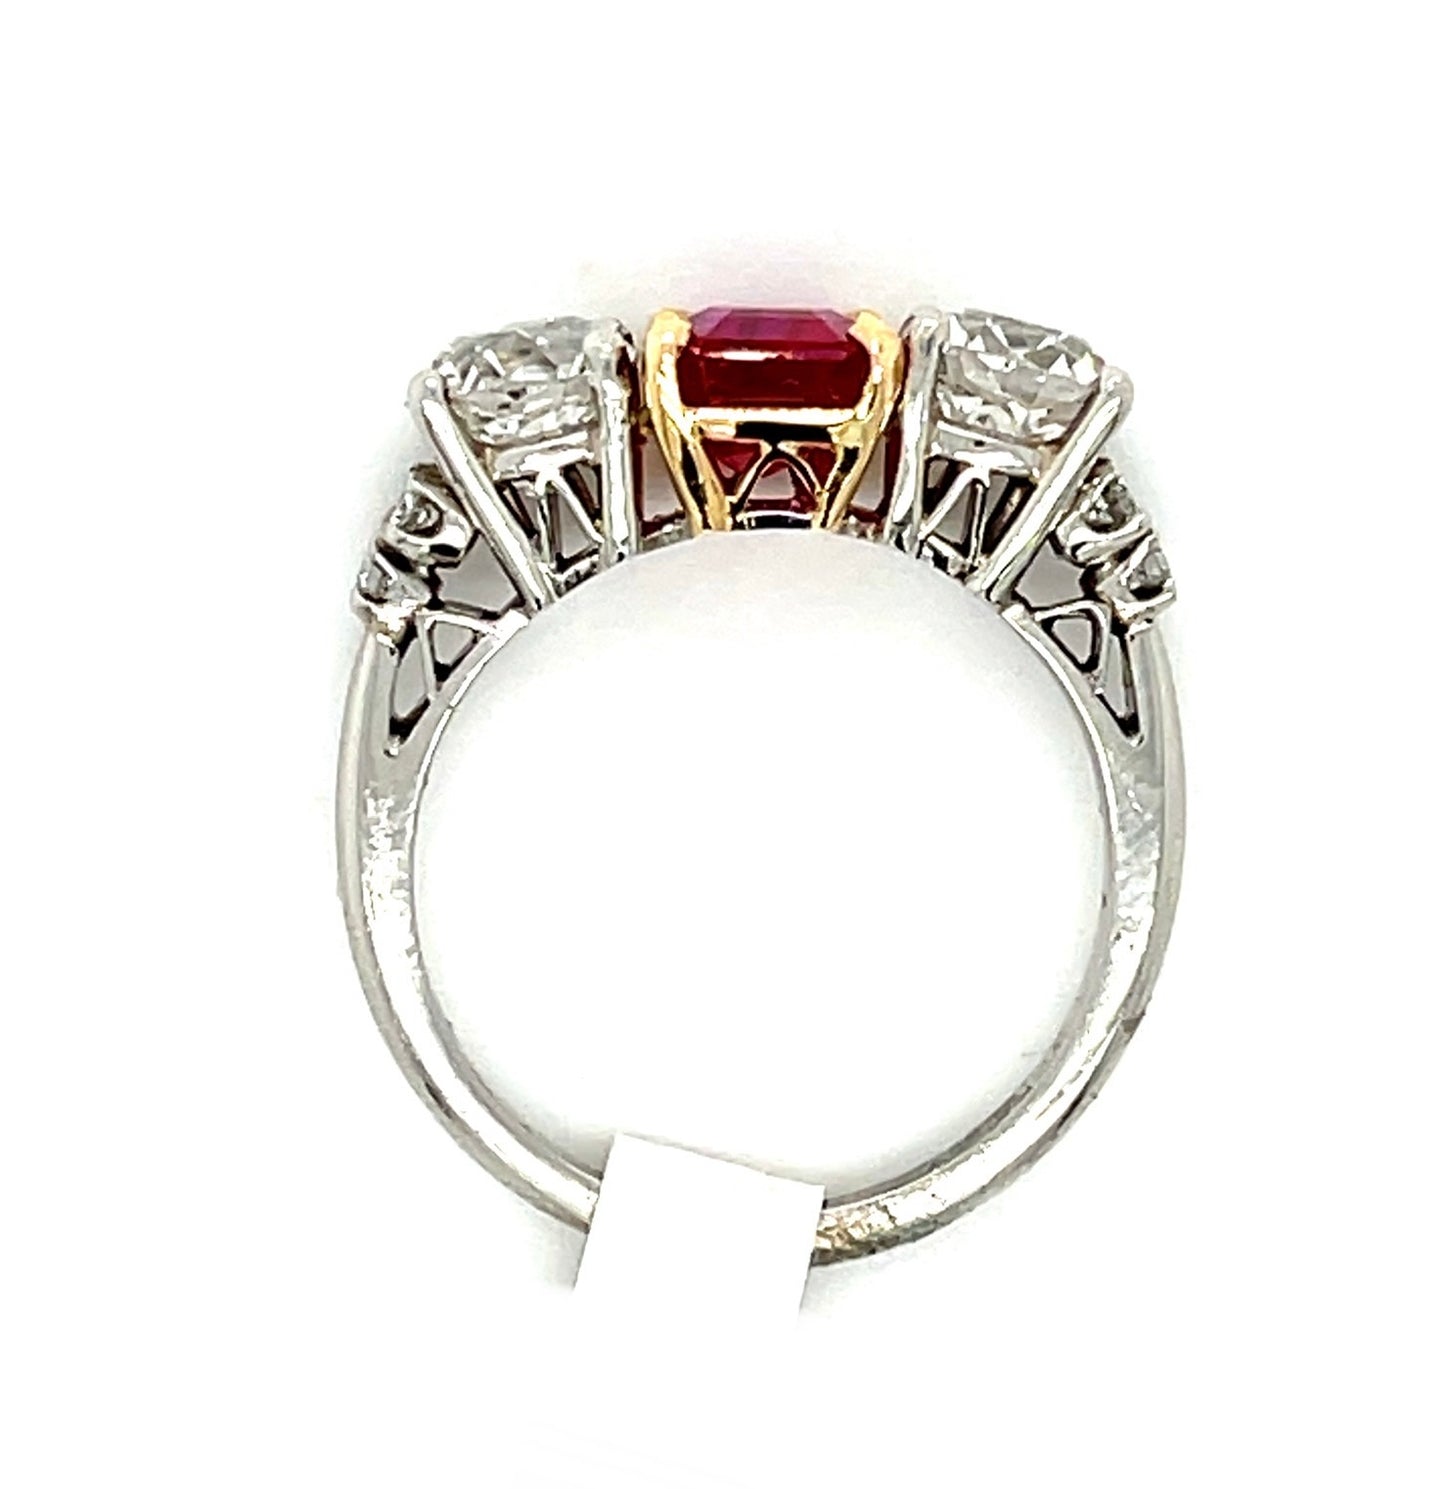 3.41ct Burma Ruby Ring (Vintage Circa 1960s) Platinum 2.05ct Old European Cut Diamond G-VS2 & F-VS2 (Two Diamonds)